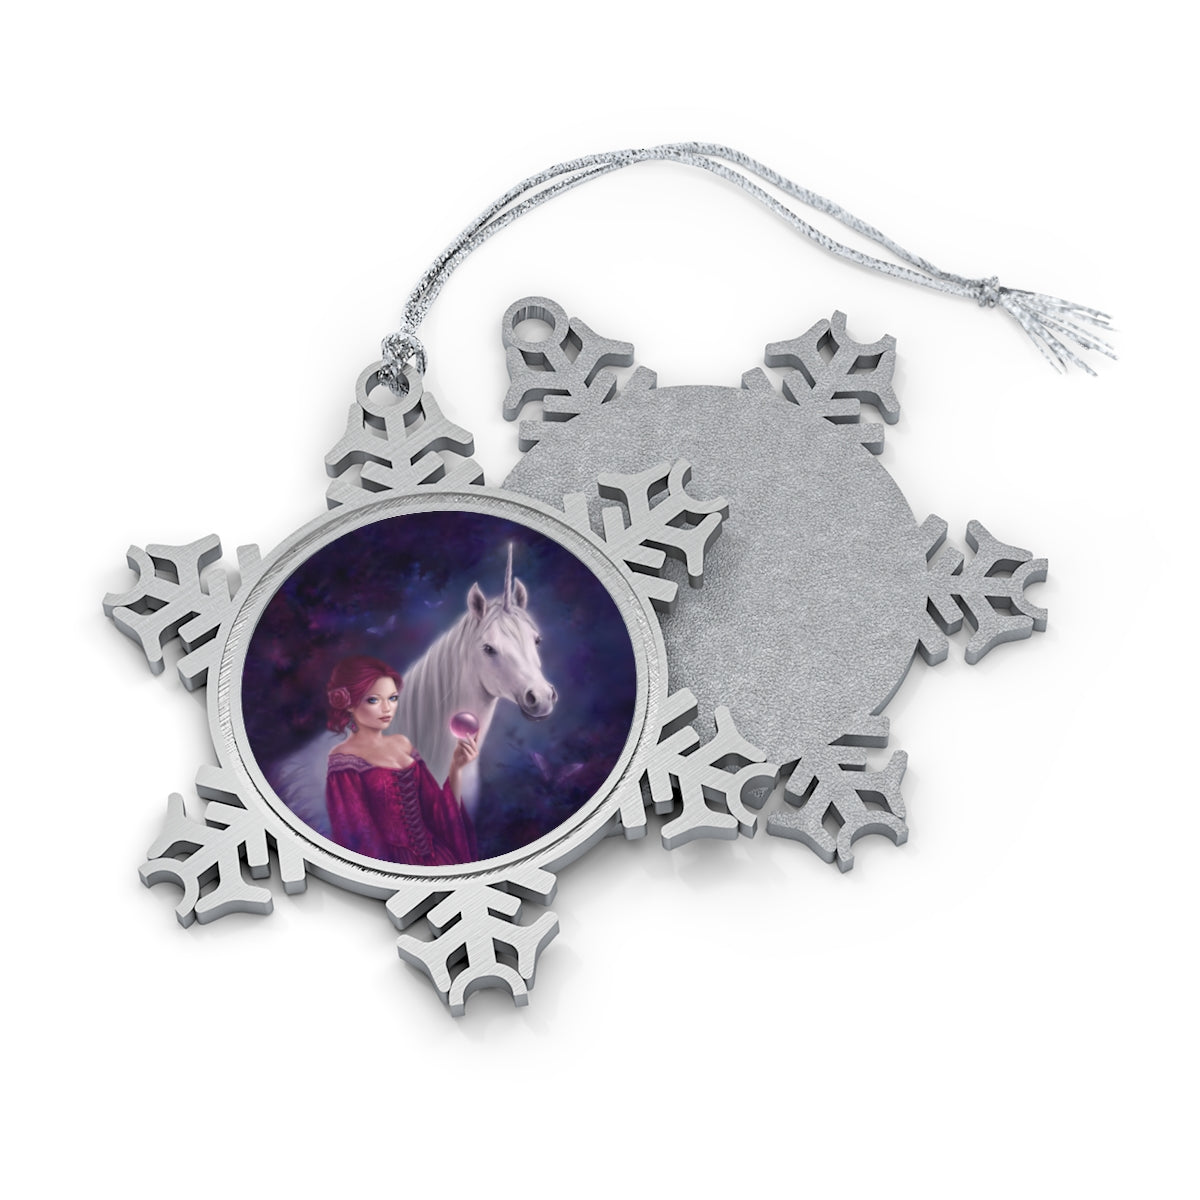 Snowflake Ornament - The Mystic